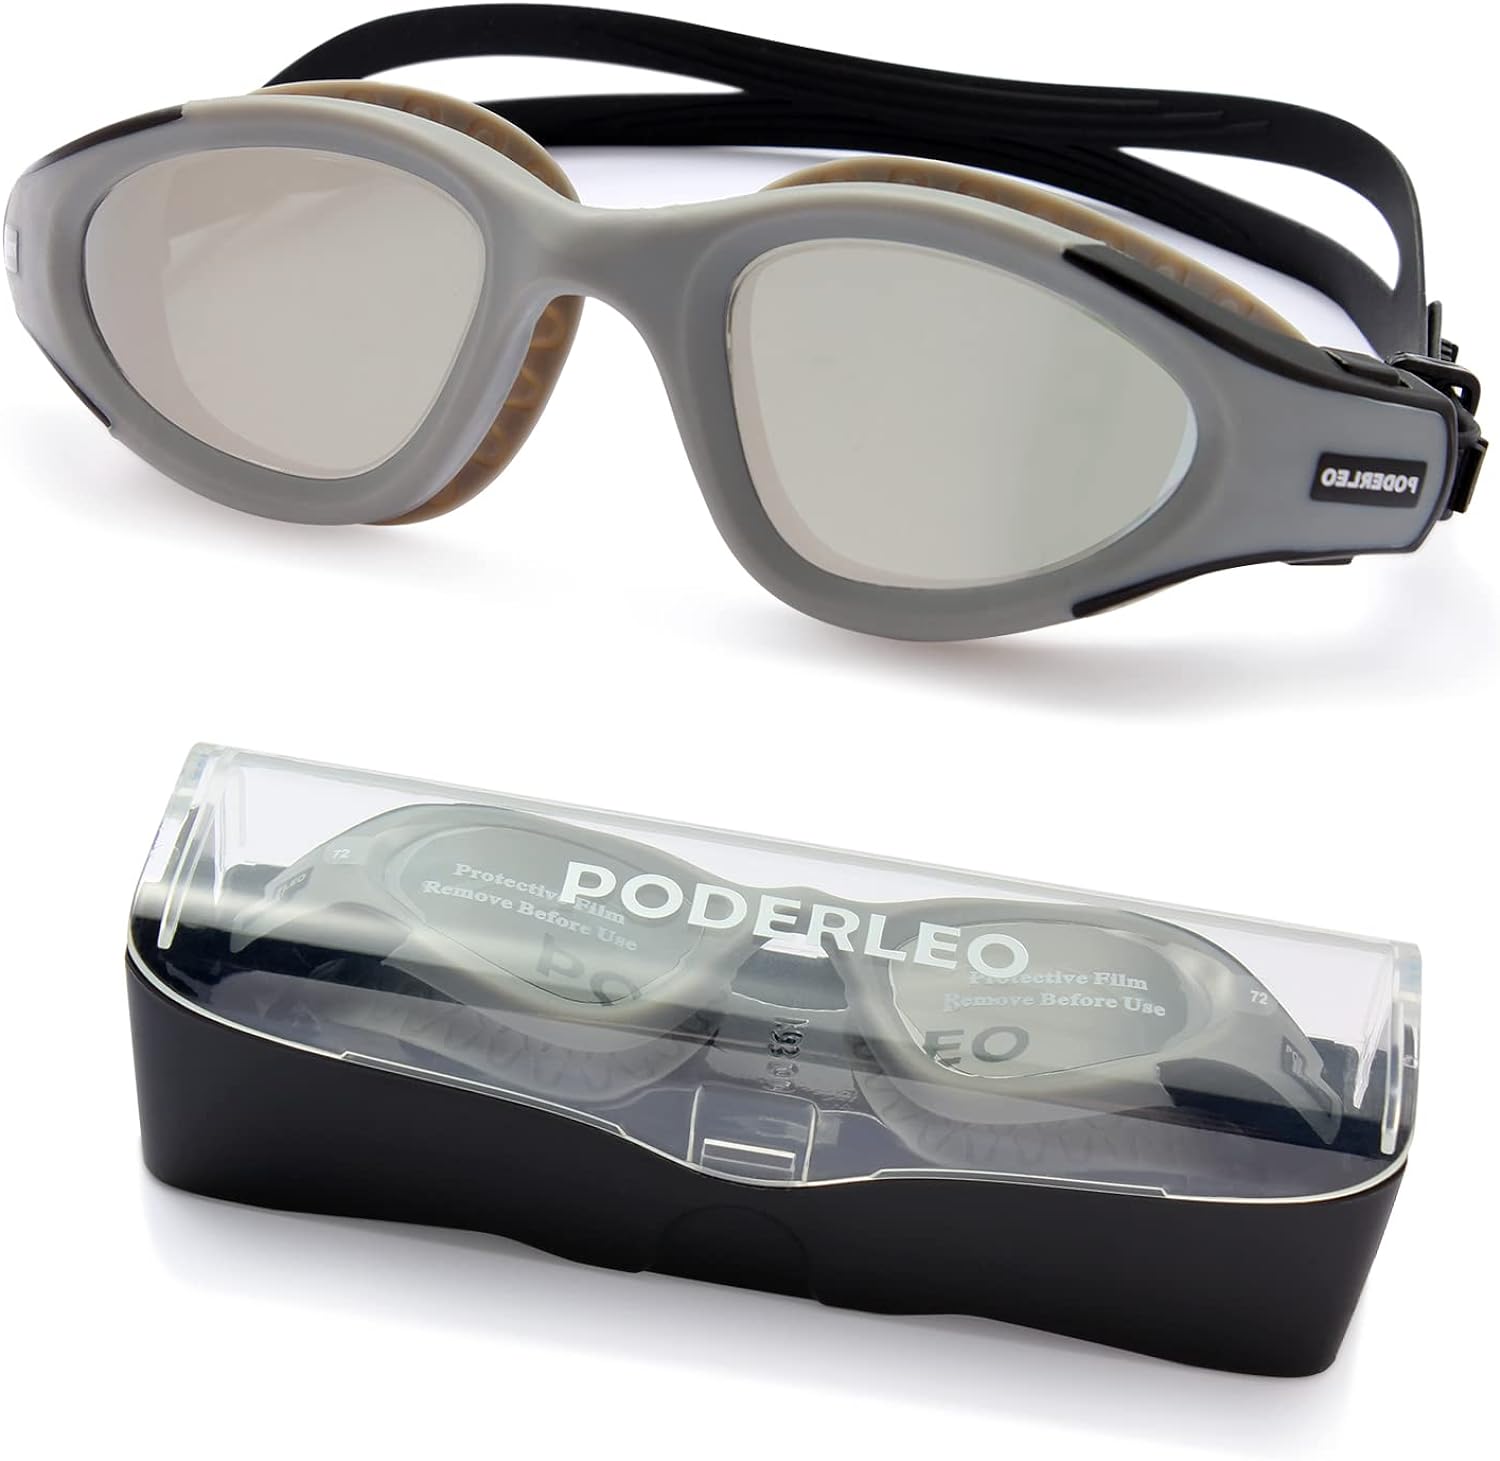 PoderLeo Swimming Goggles,Anti Fog Swim Goggles,UV Protection No Leaking Polarized Goggles for Swimming Men Women Unisex Adult